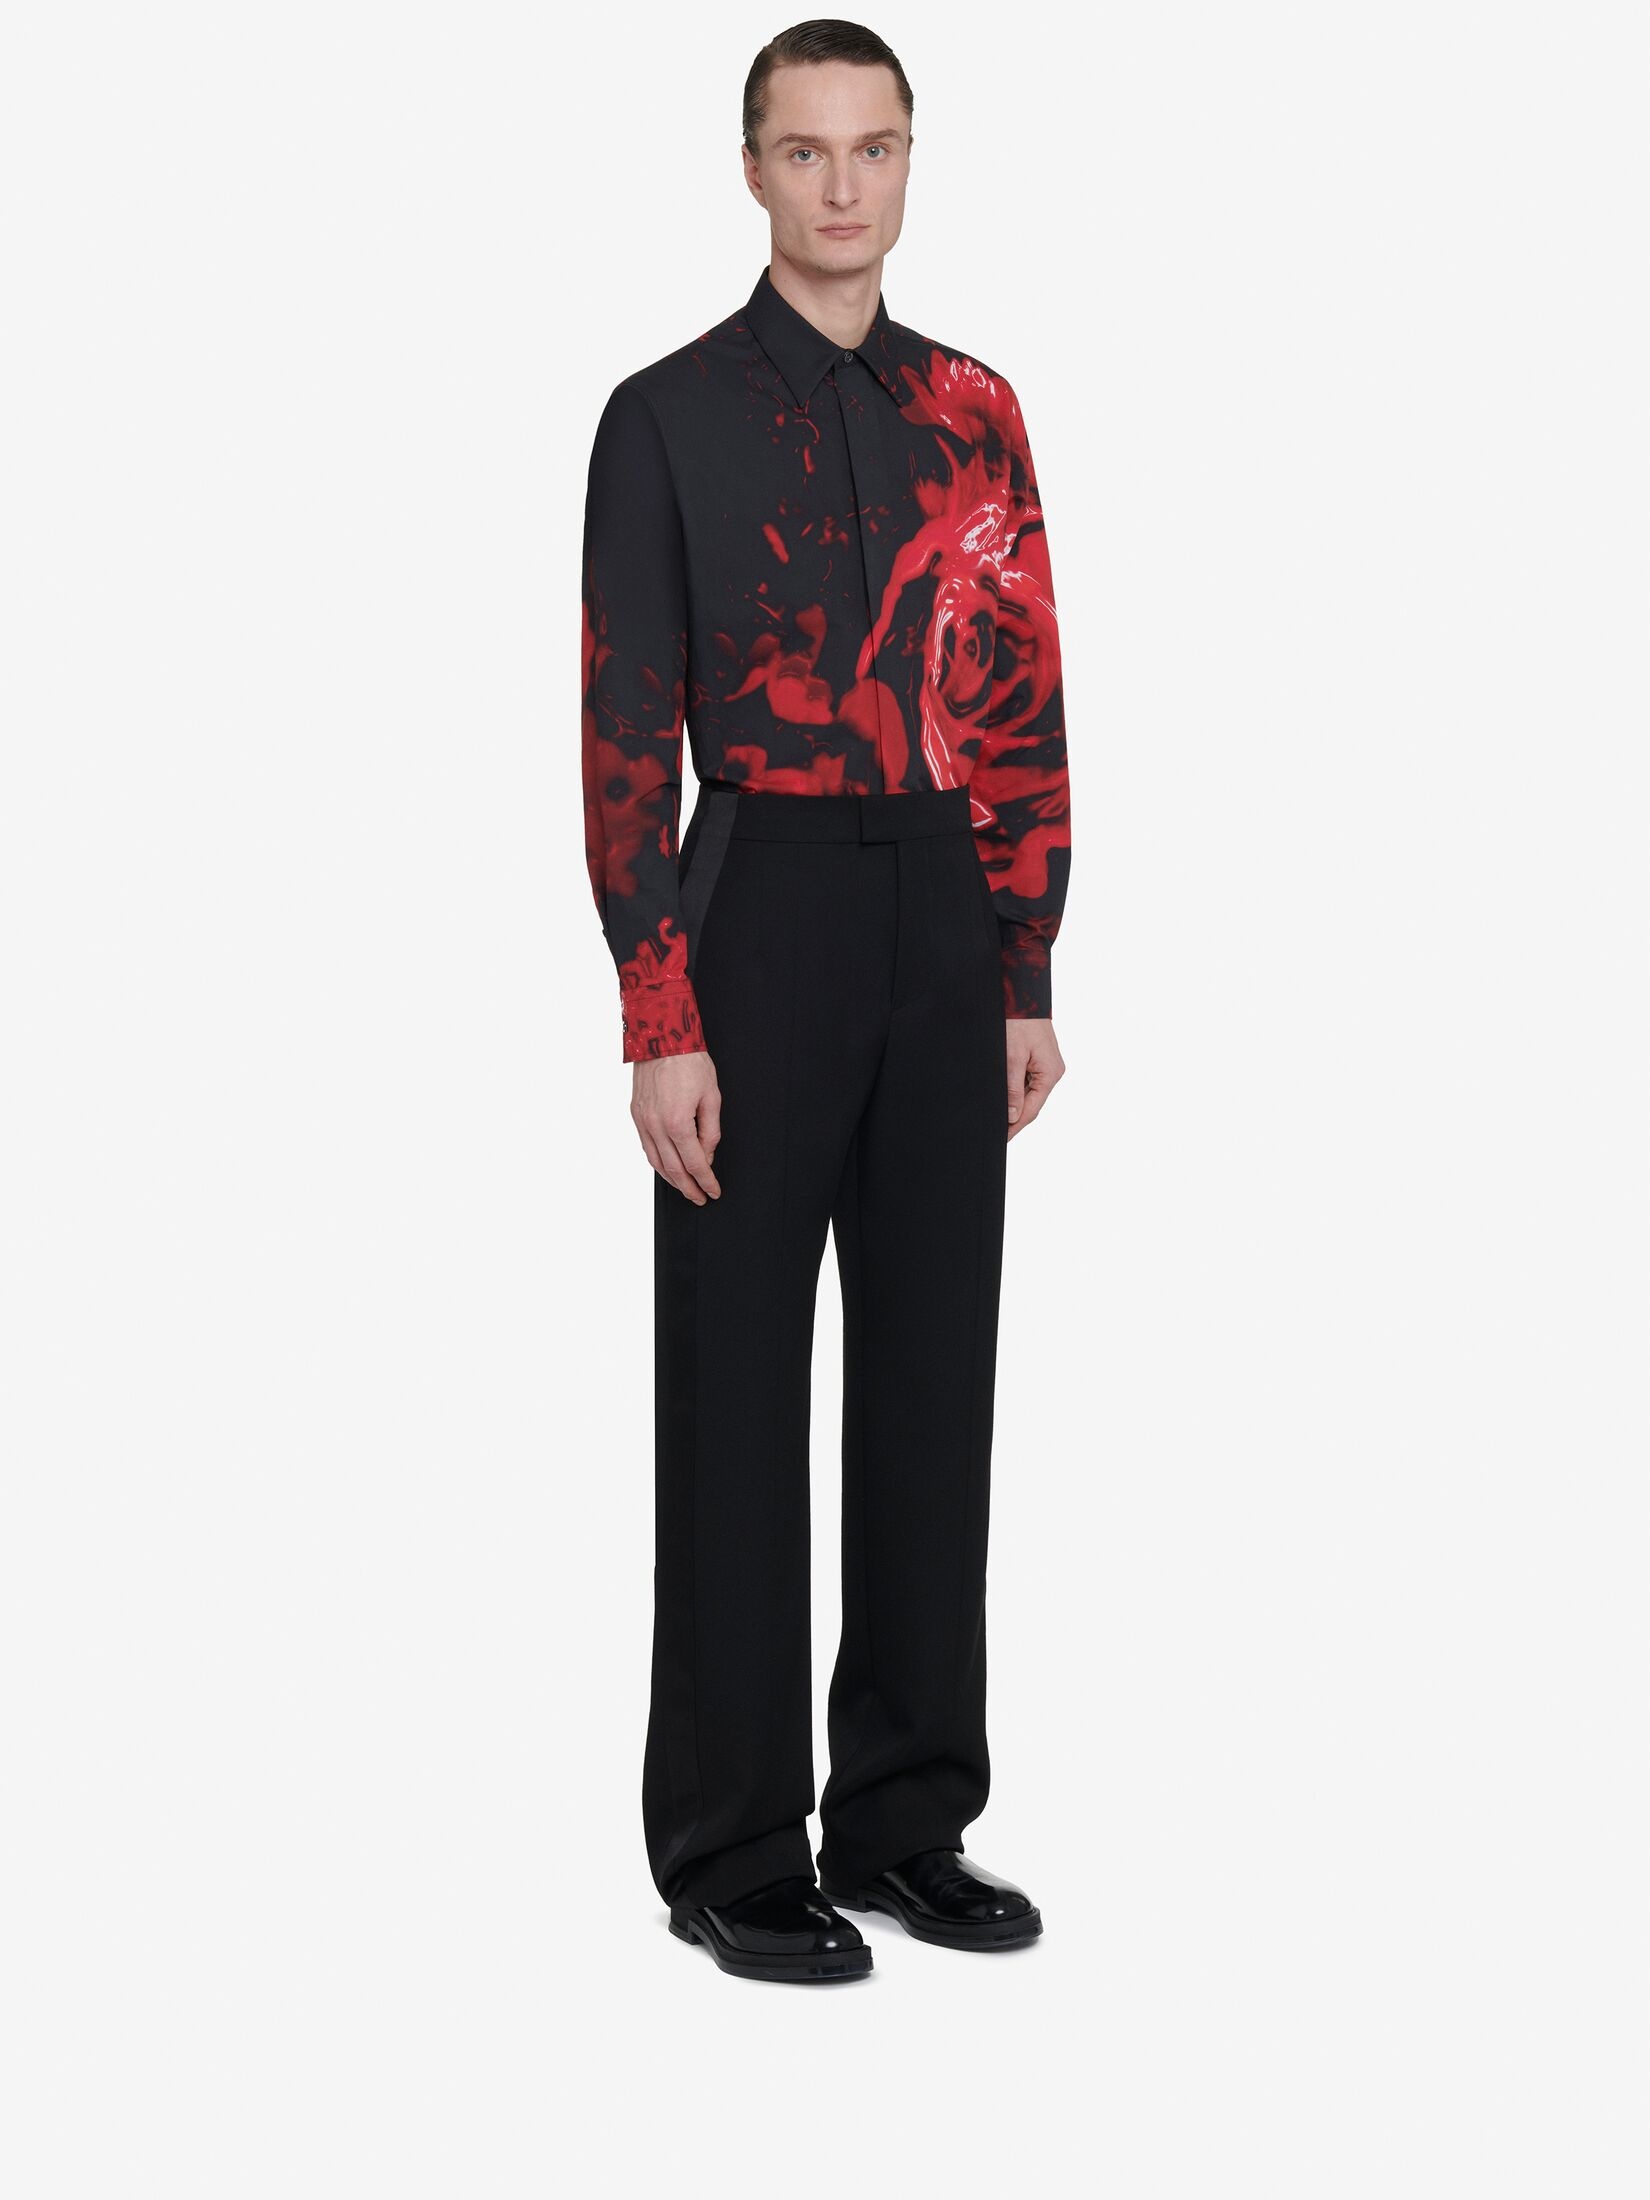 Men's Wax Flower Shirt in Black/red - 3